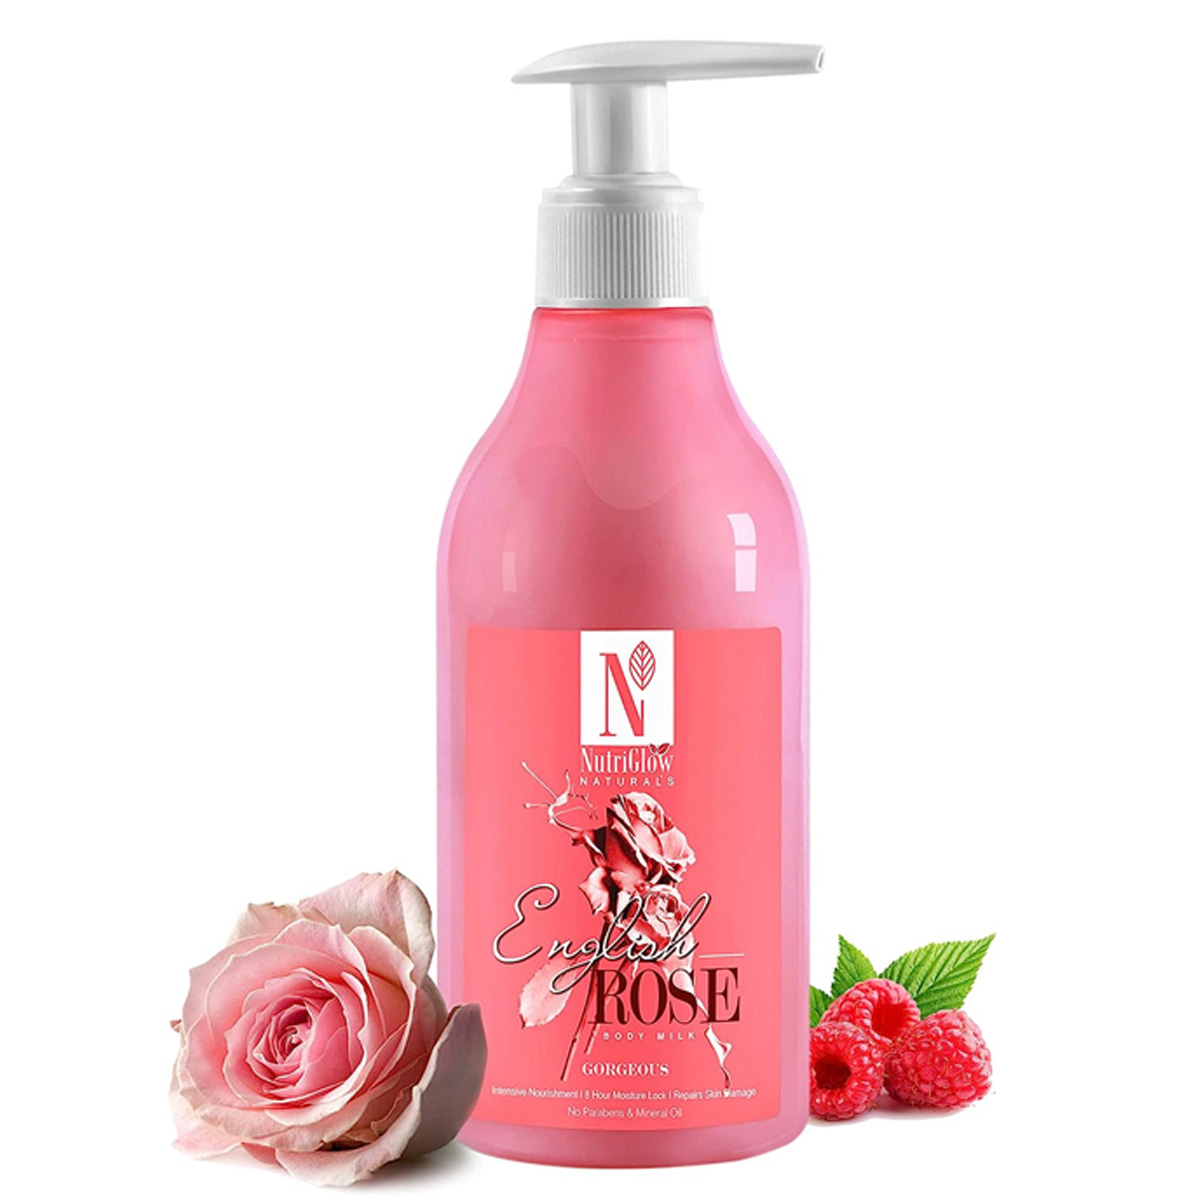 Nutriglow Natural's English Rose Body Milk, 150ml